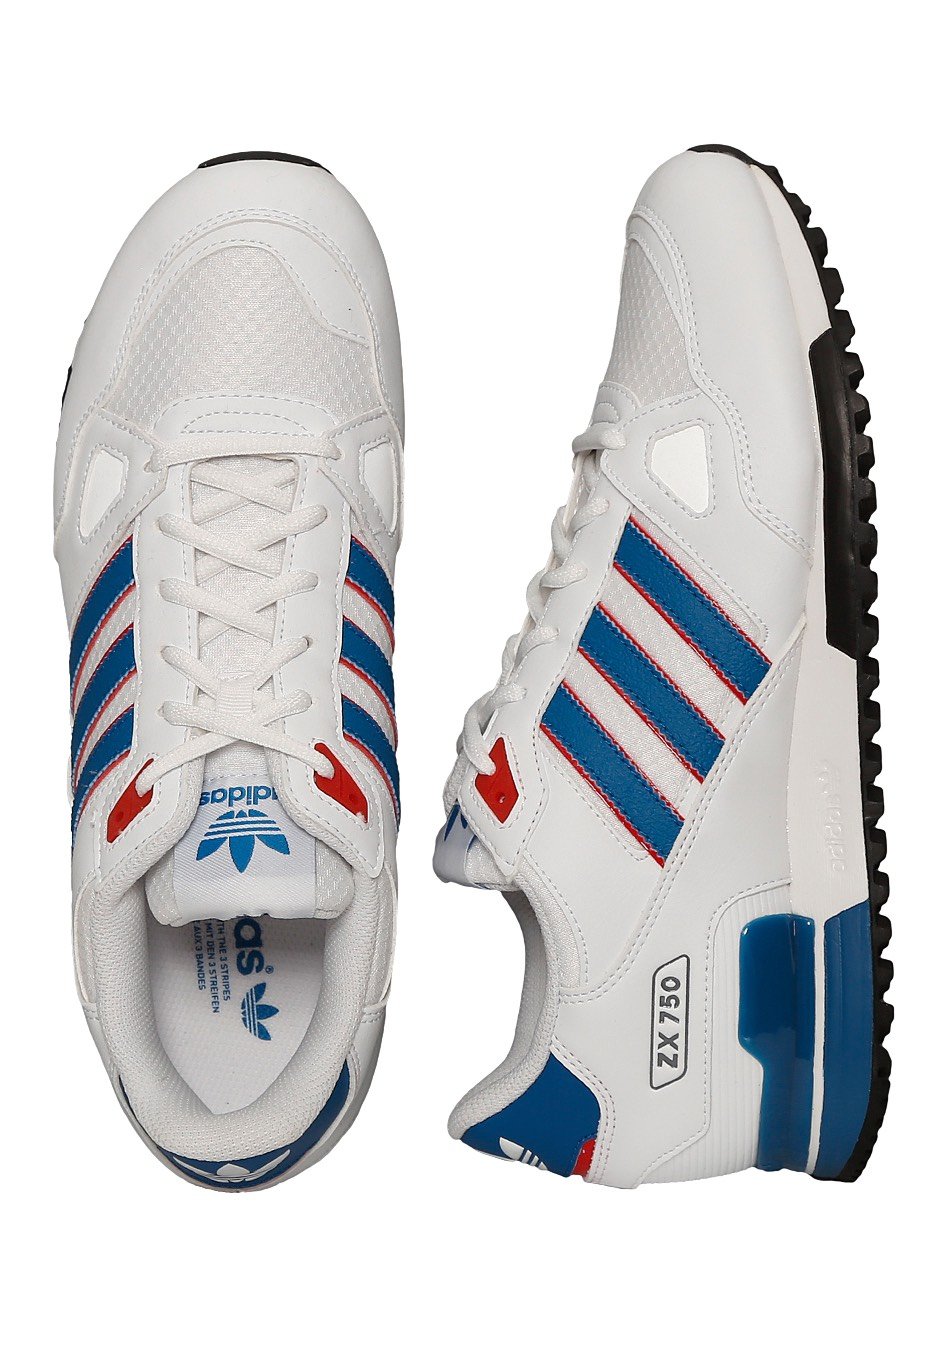 adidas zx 750 white blue